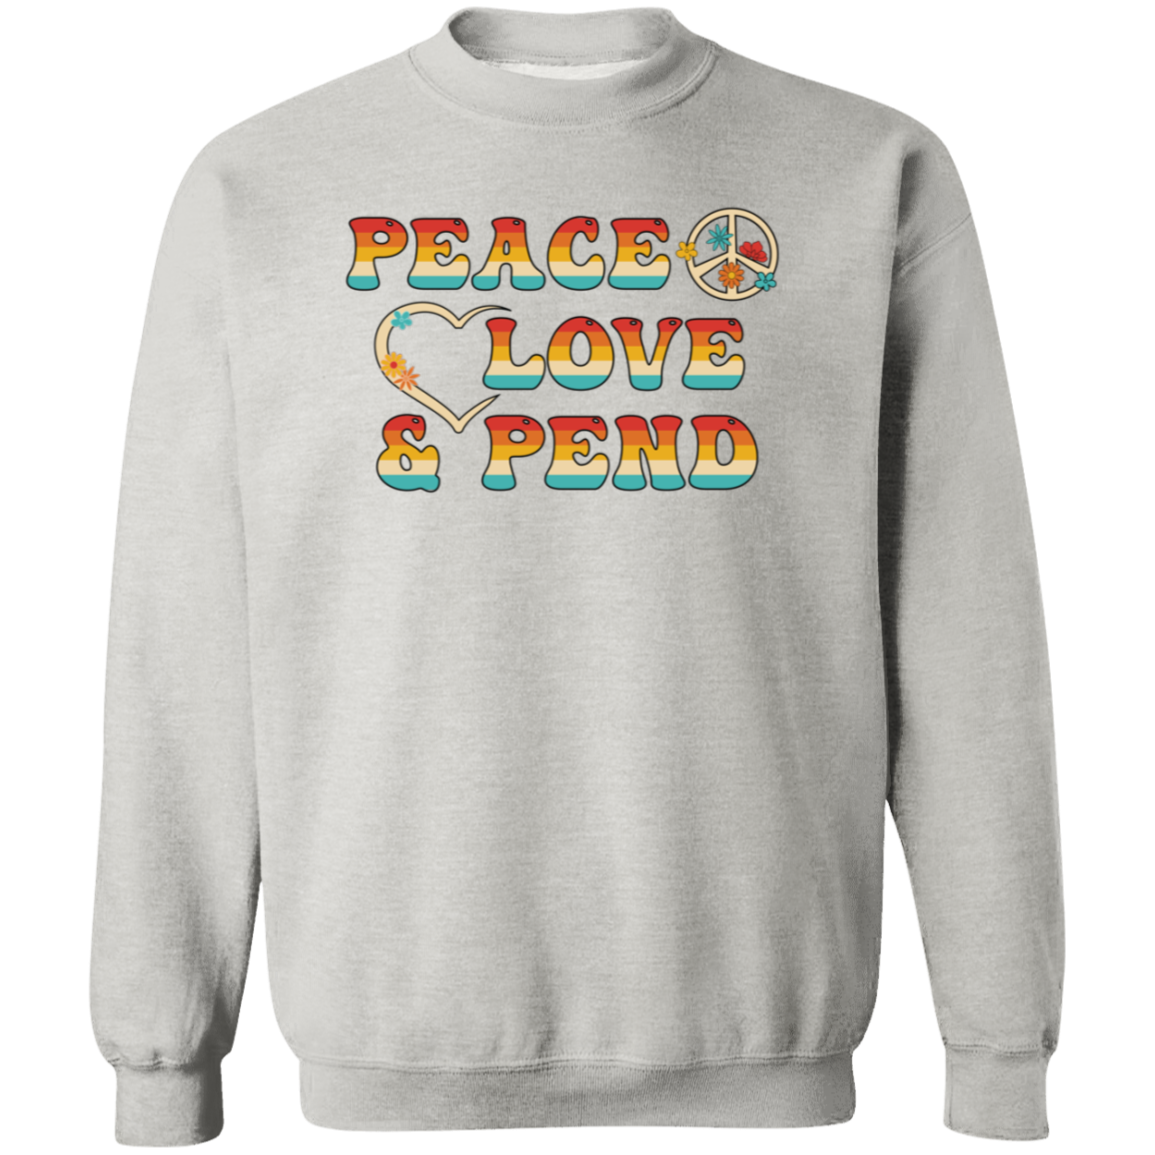 Peace, Love & Pend - Sweatshirt